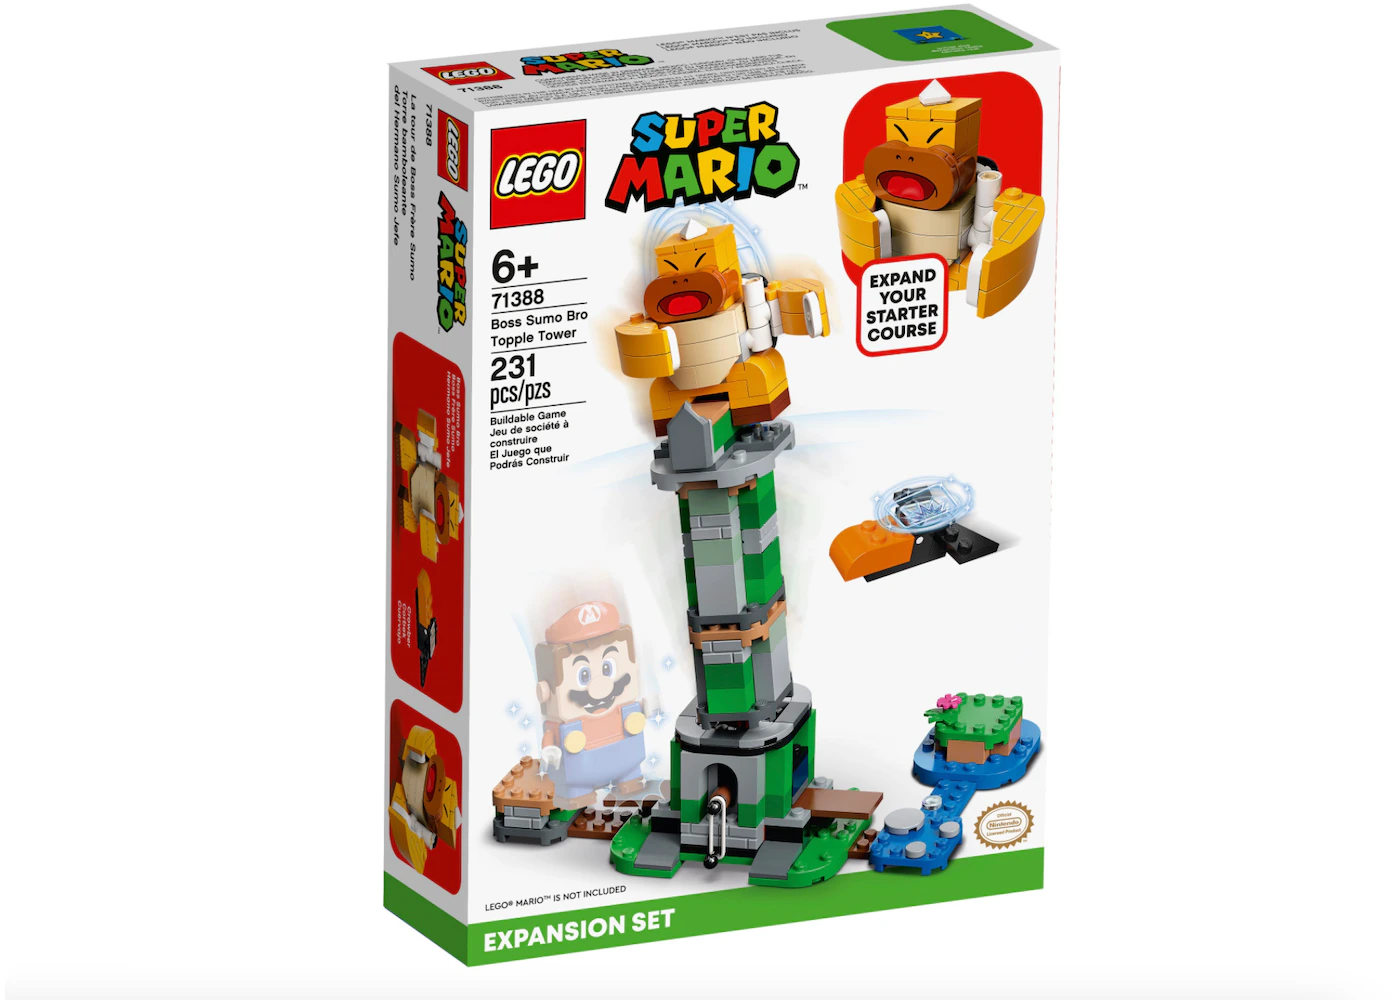 guide ben Brød LEGO Super Mario Boss Sumo Bro Topple Tower Expansion Set 71388 - FW21 - US